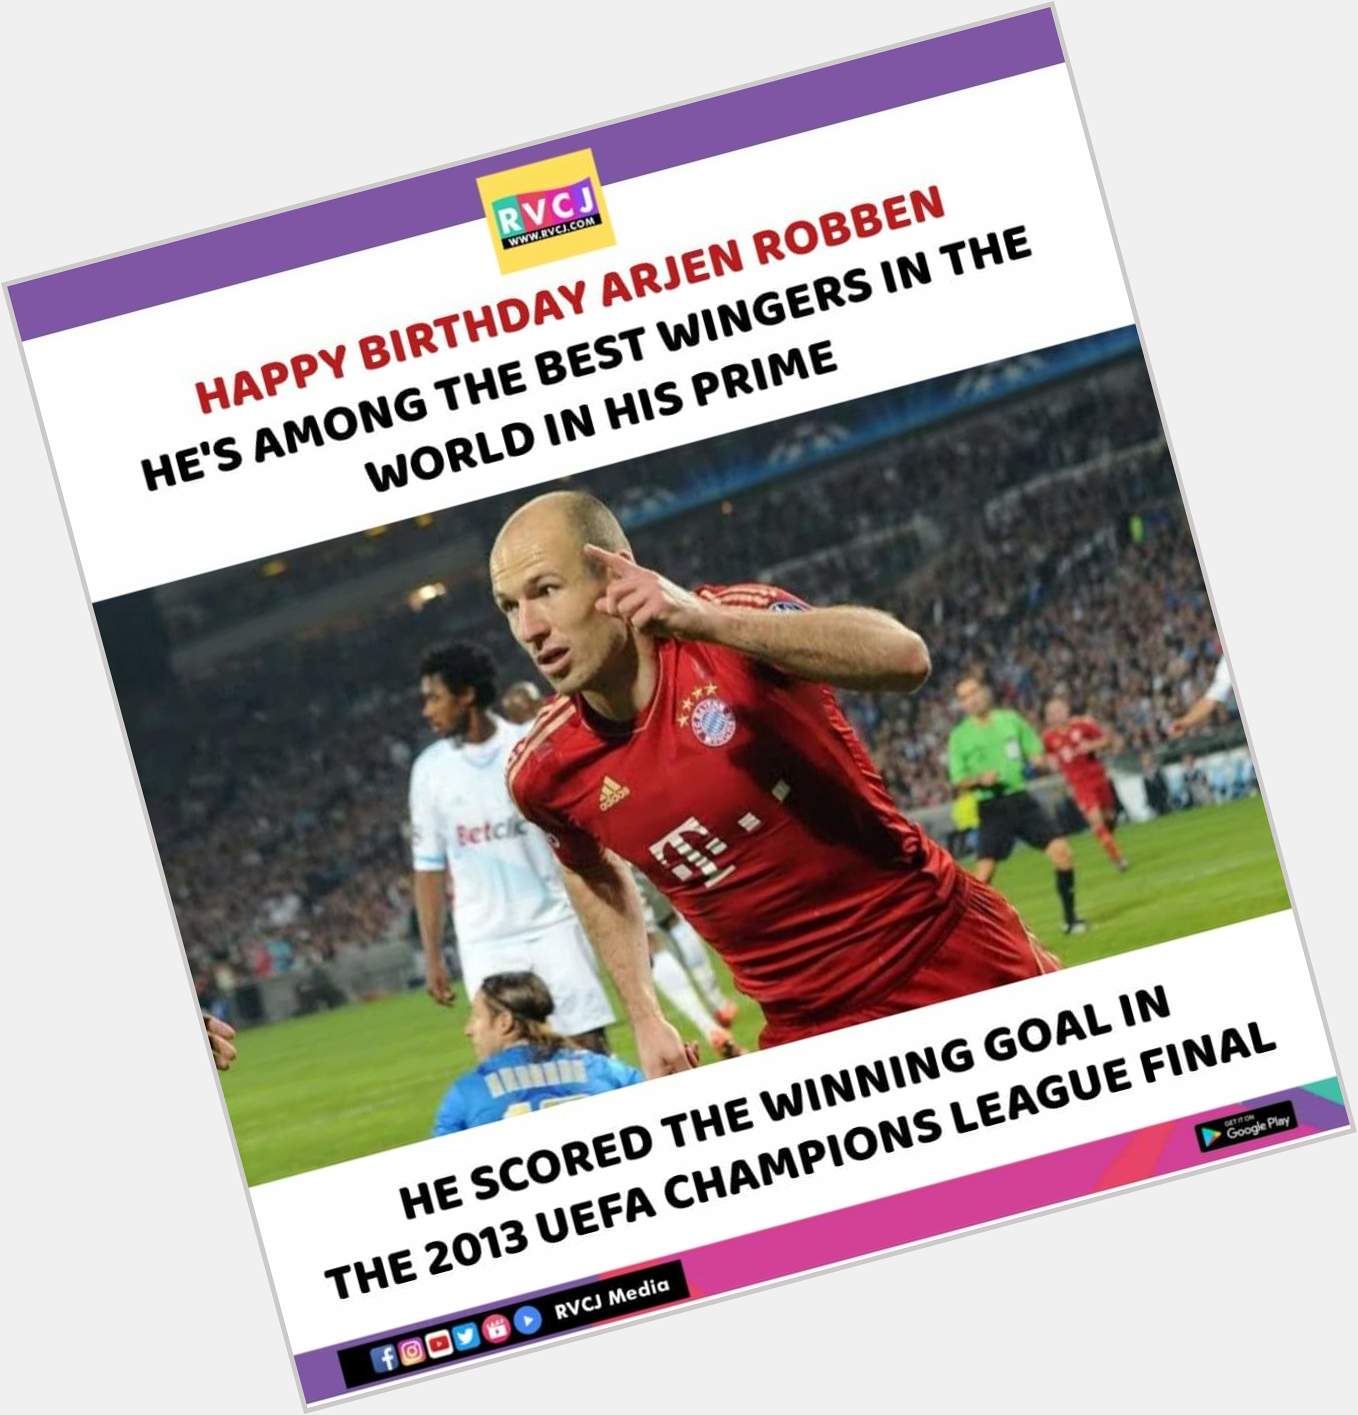 Happy Birthday Arjen Robben!  